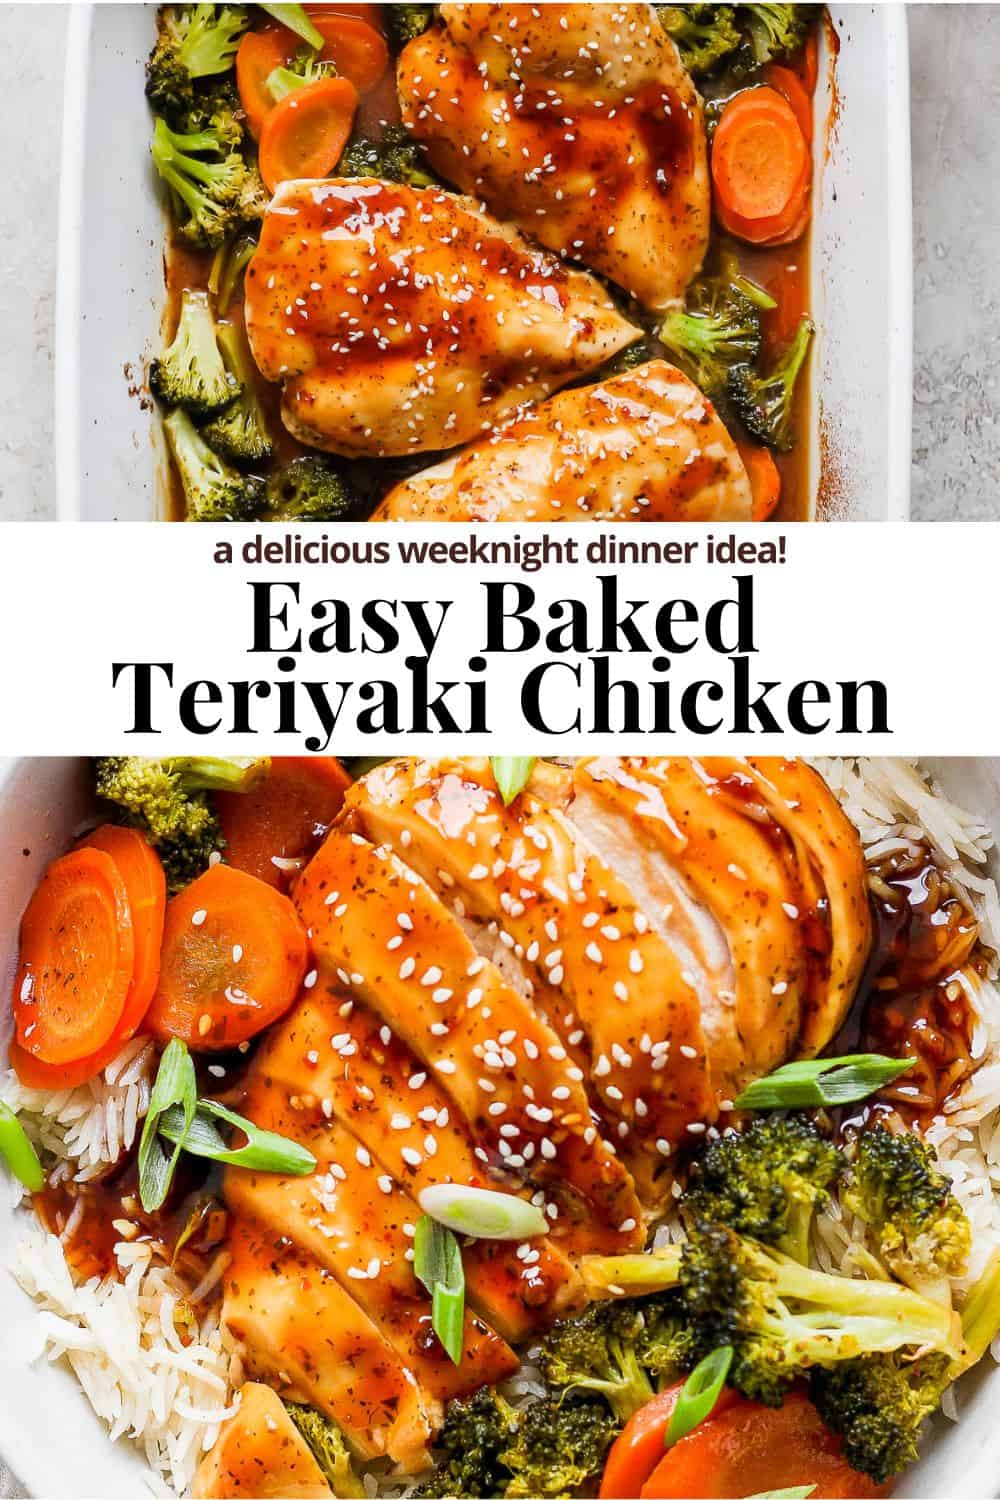 Pinterest image showing baked teriyaki chicken with the title "easy baked teriyaki chicken. a delicious weeknight dinner idea".